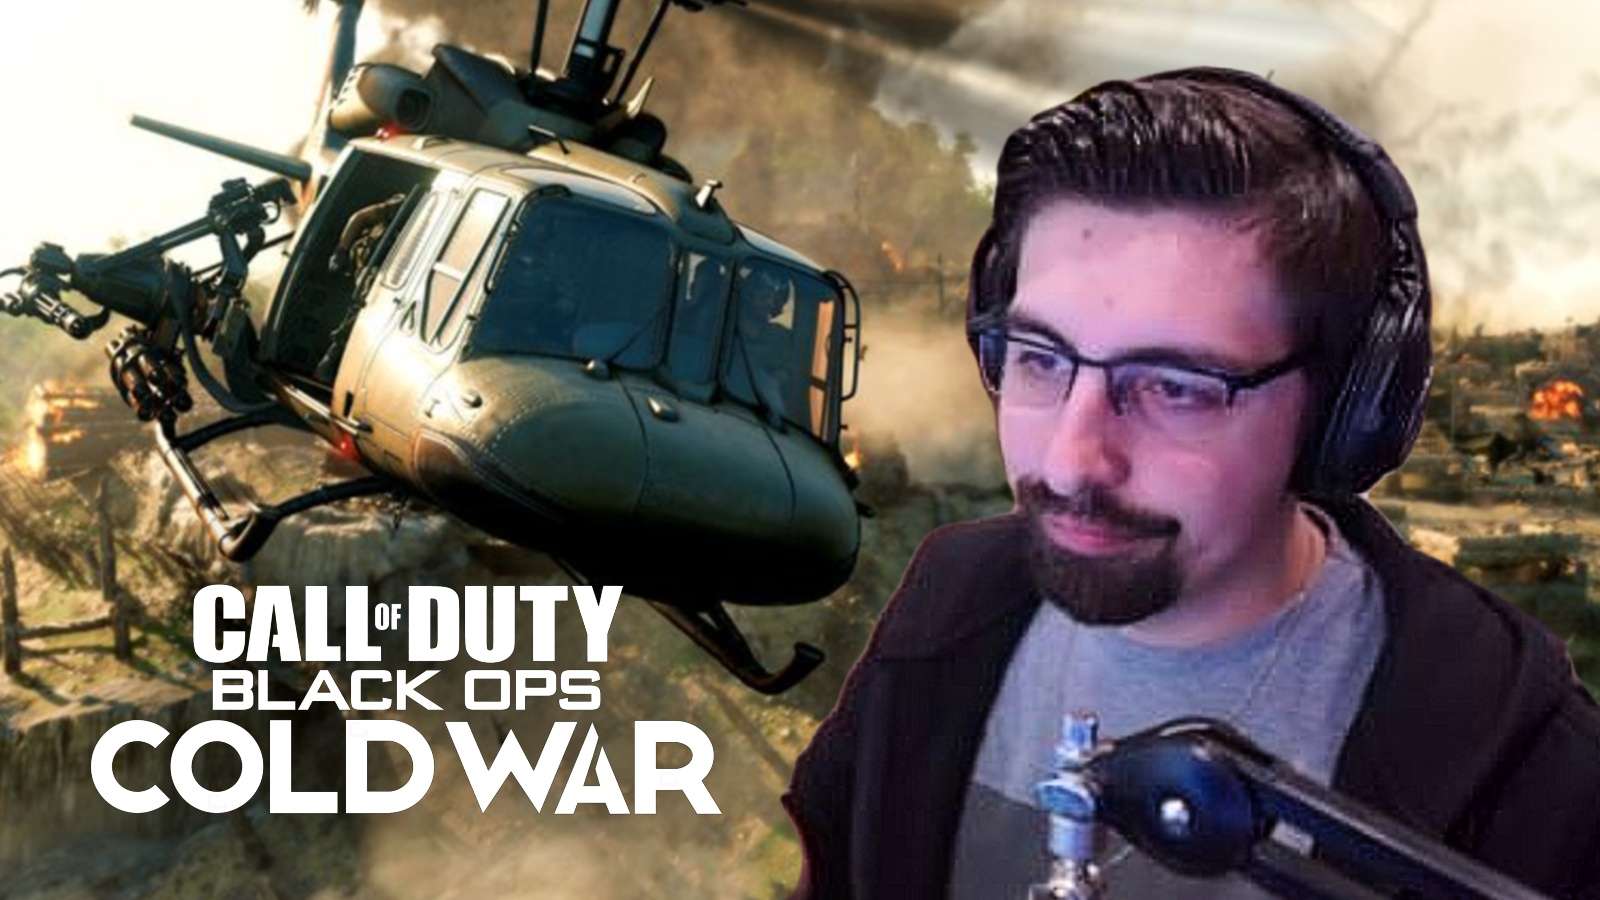 Shroud on Call of Duty Black Ops Cold War killstreaks